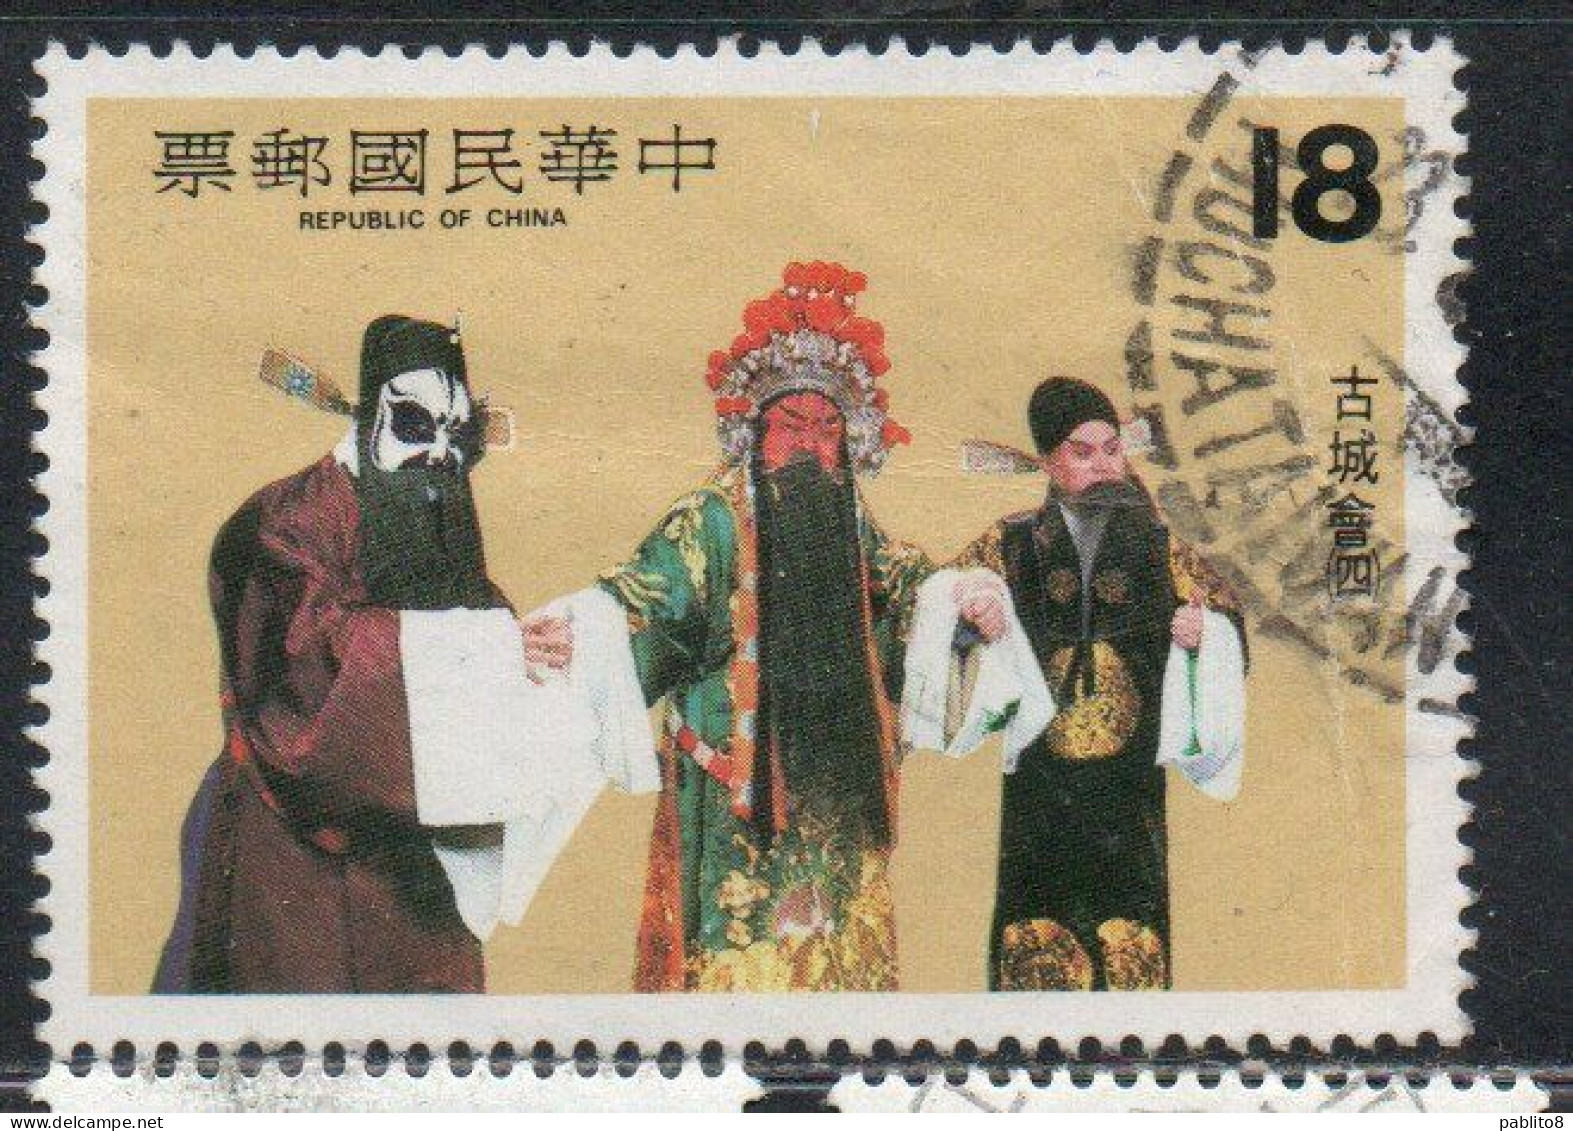 CHINA REPUBLIC CINA TAIWAN FORMOSA 1982 OPERA SCENES 18$ USED USATO OBLITERE' - Used Stamps